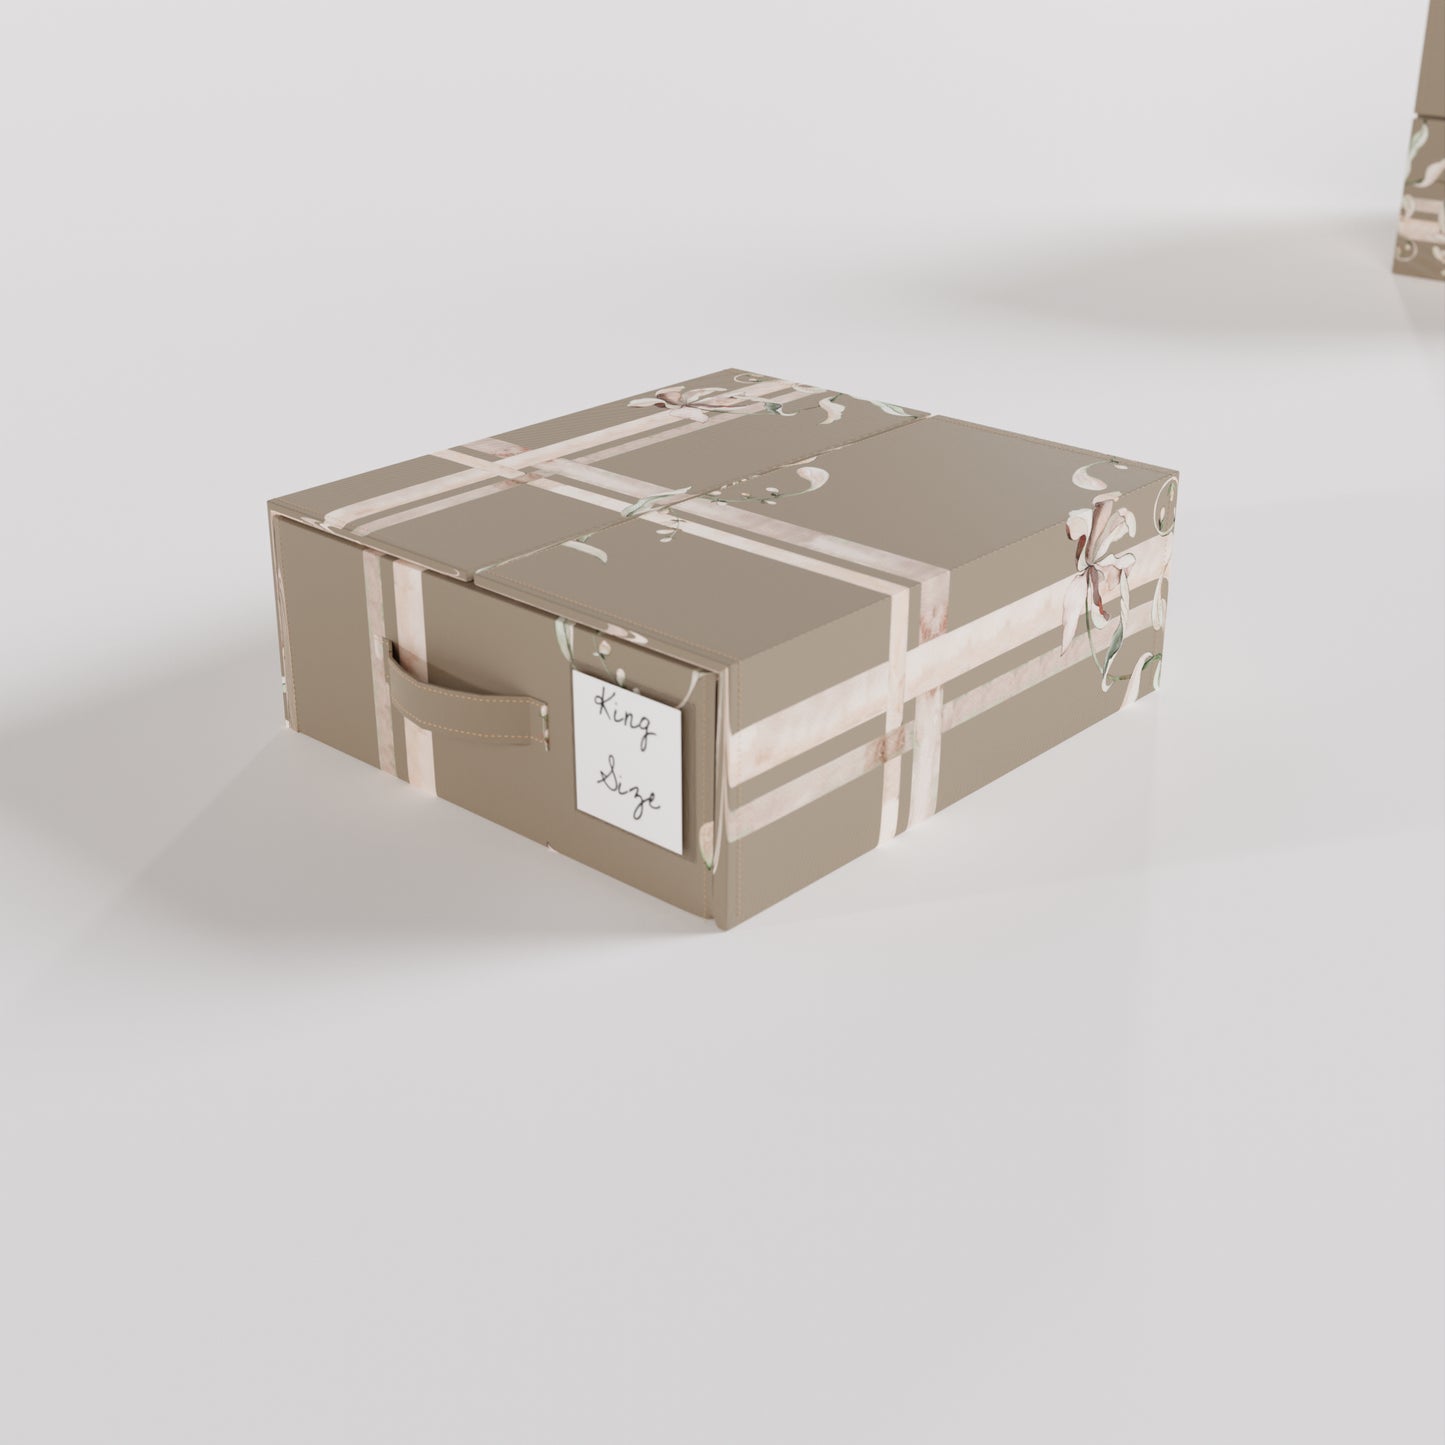 Isabel & Celine Foldable Bedding Storage Box Premium Vegan Leather 4 color set Organiser Collapsible